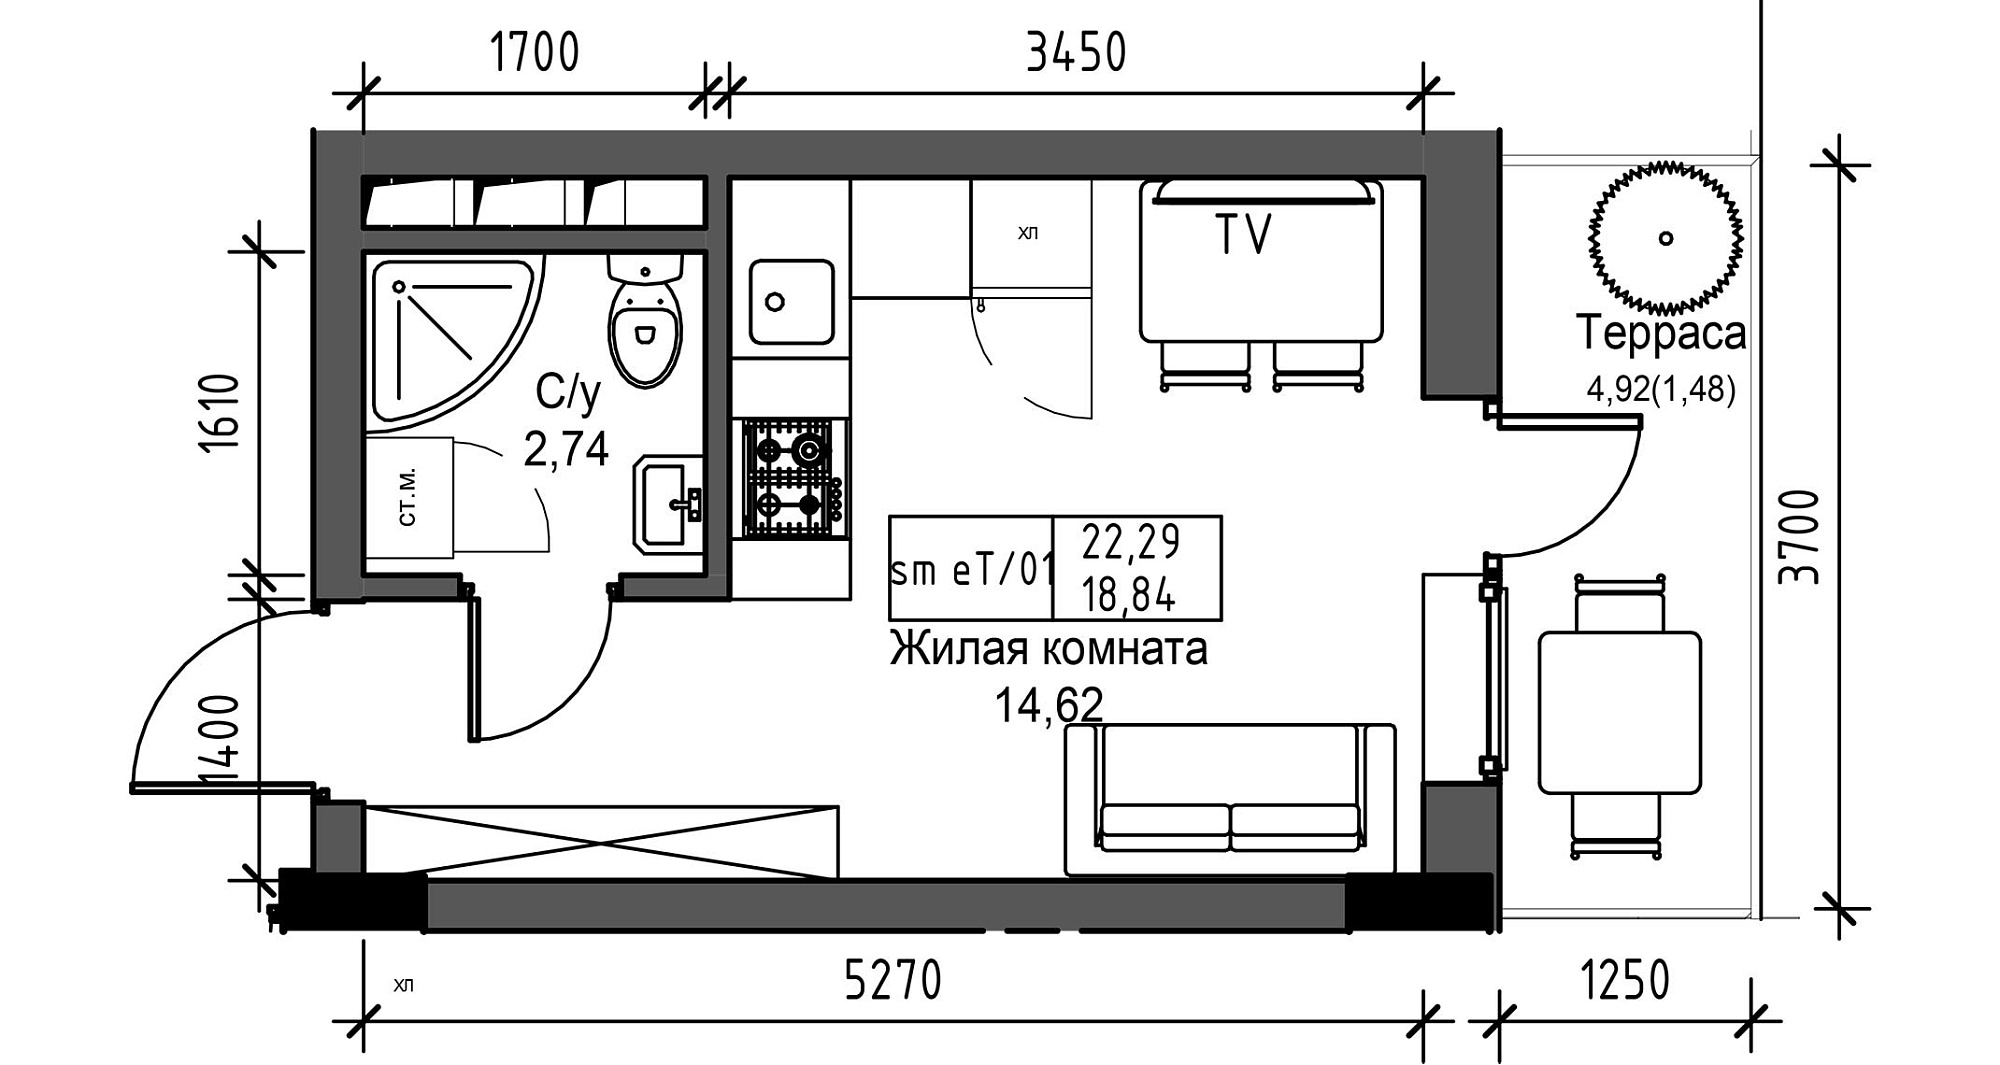 Planning Smart flats area 18.84m2, UM-003-04/0023.